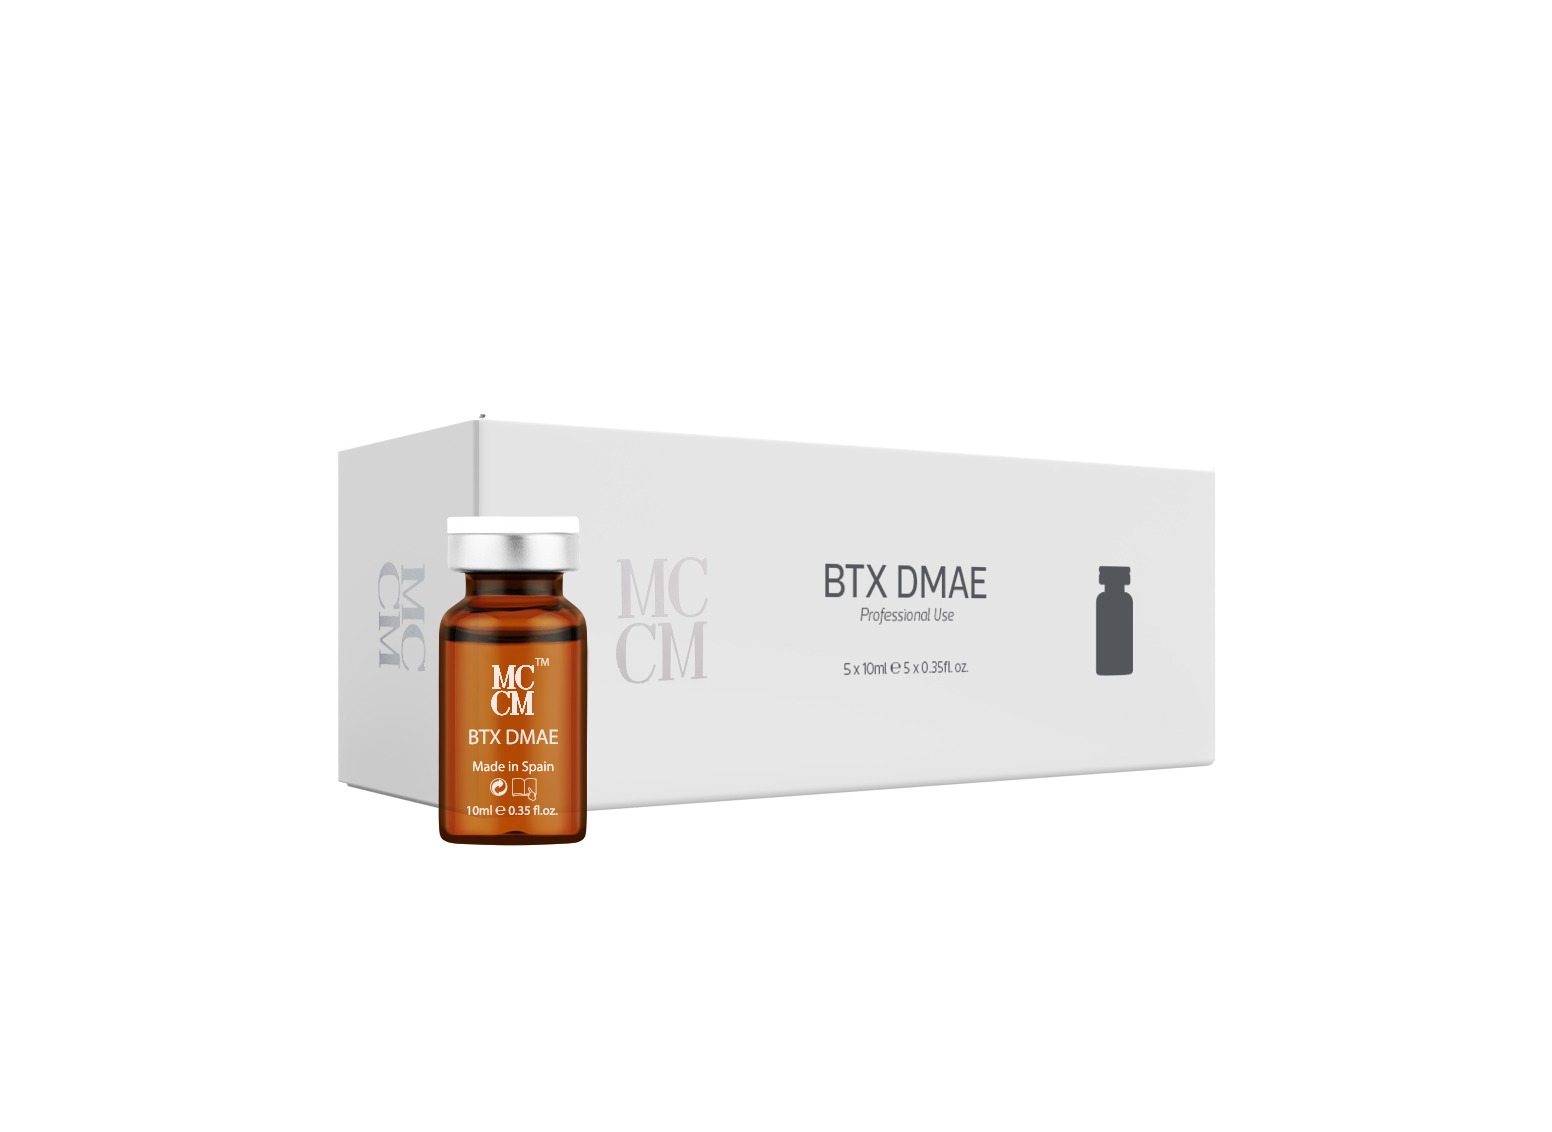 BTX DMAE (Box of 5 x 10ml) -Only real alternative to Botox